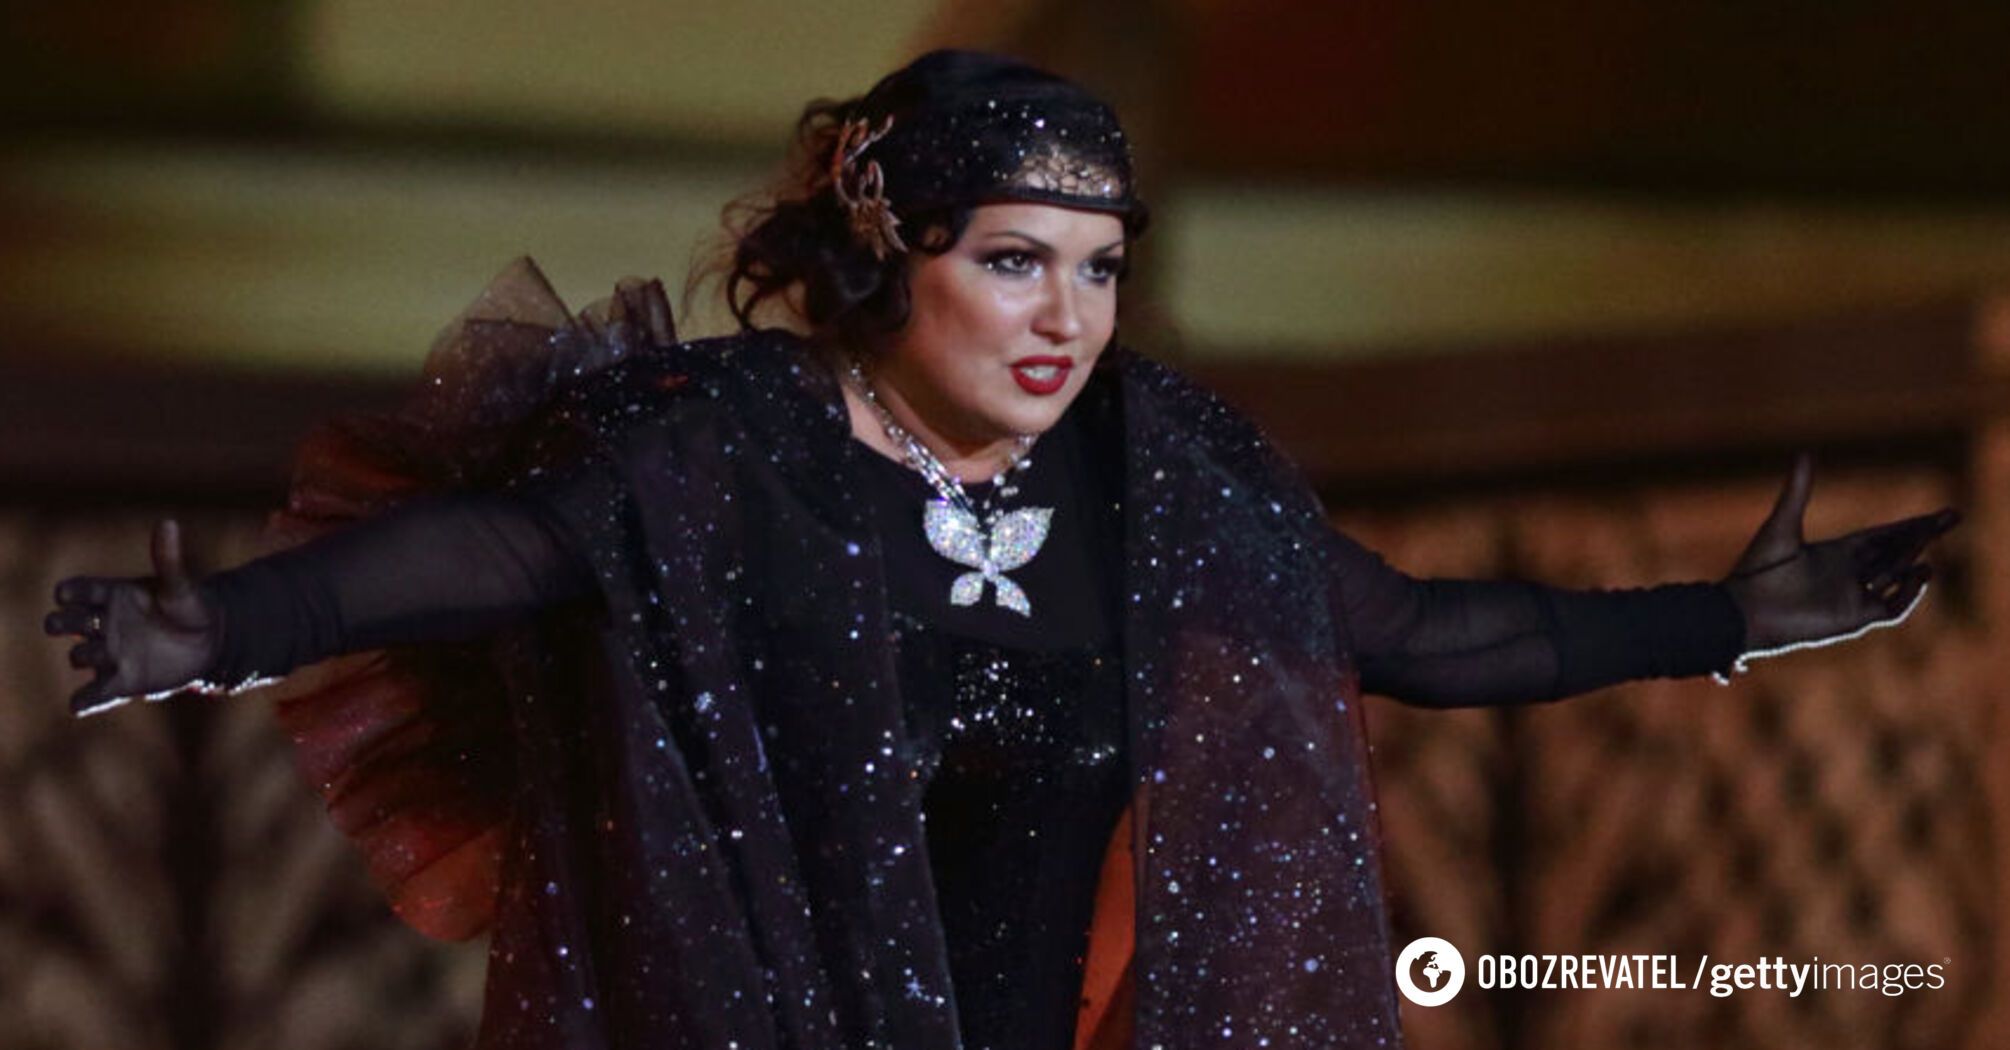 Putinist Anna Netrebko will perform in Berlin: German state opera justifies opera singer